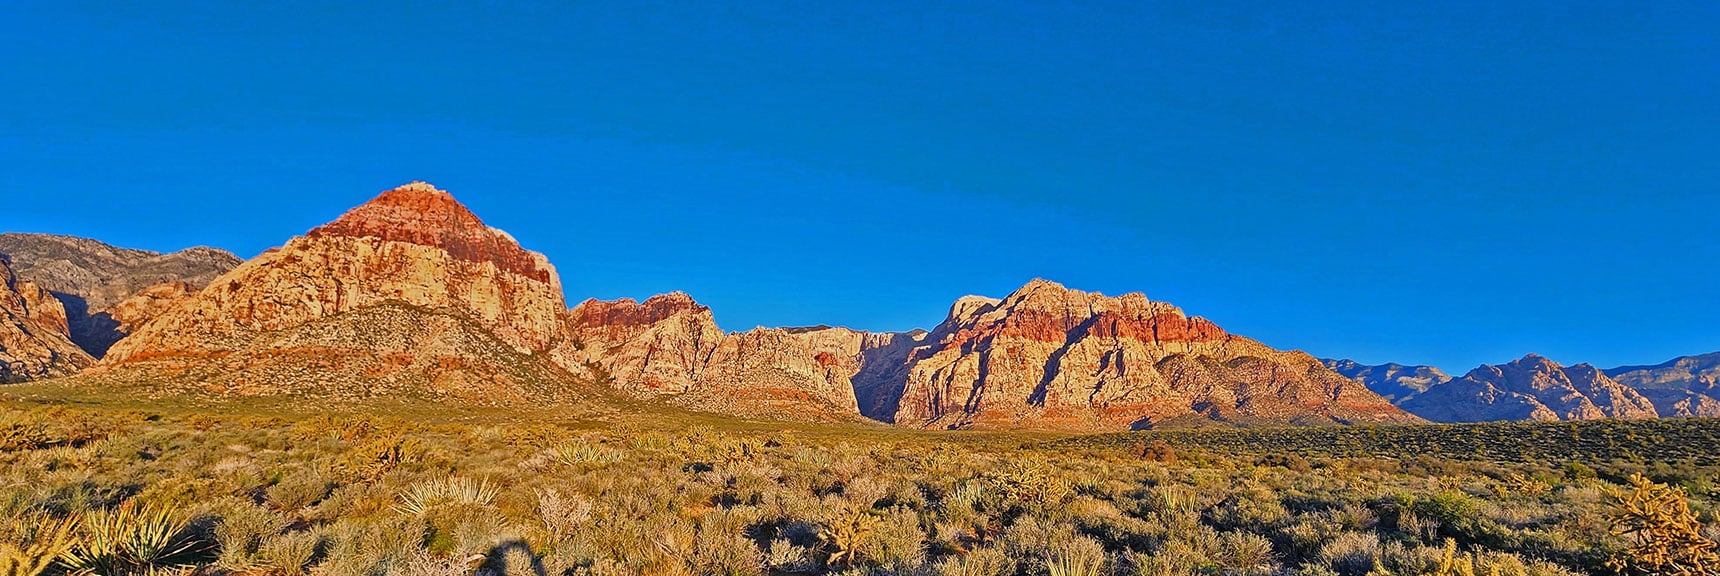 Rainbow Mt. Juniper Peak, Bridge Mt. from Scenic Drive | Knoll Trail | Red Rock Canyon National Conservation Area, Nevada | David Smith | LasVegasAreaTrails.com